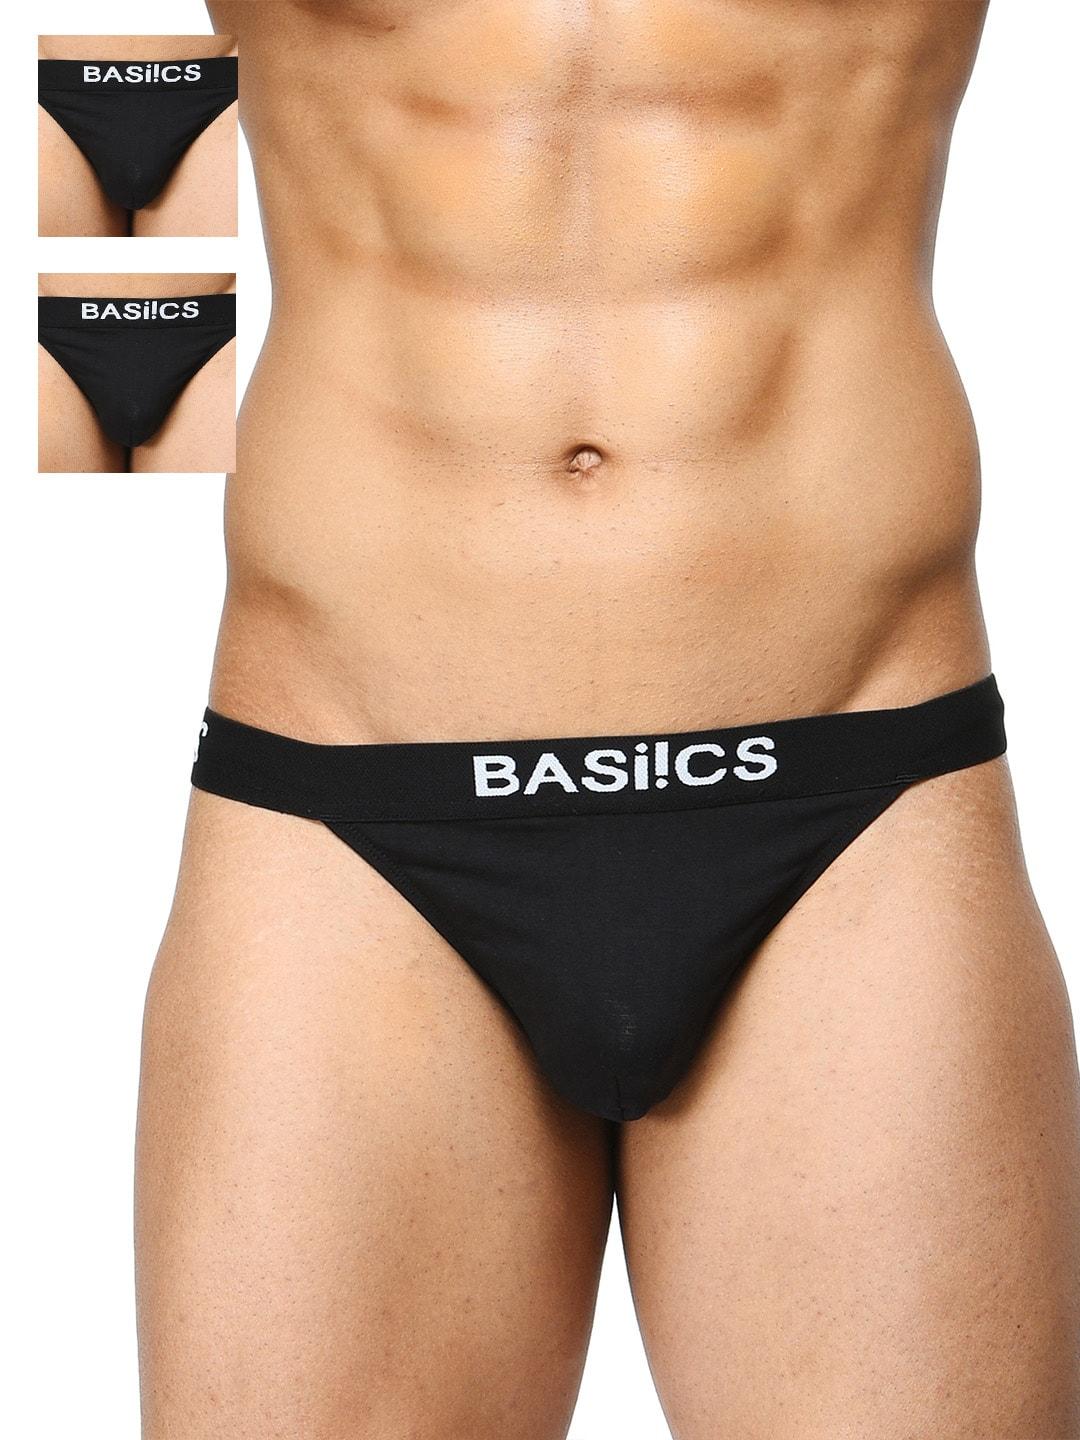 basiics by la intimo men pack of 3 black thongs bcsth010c222